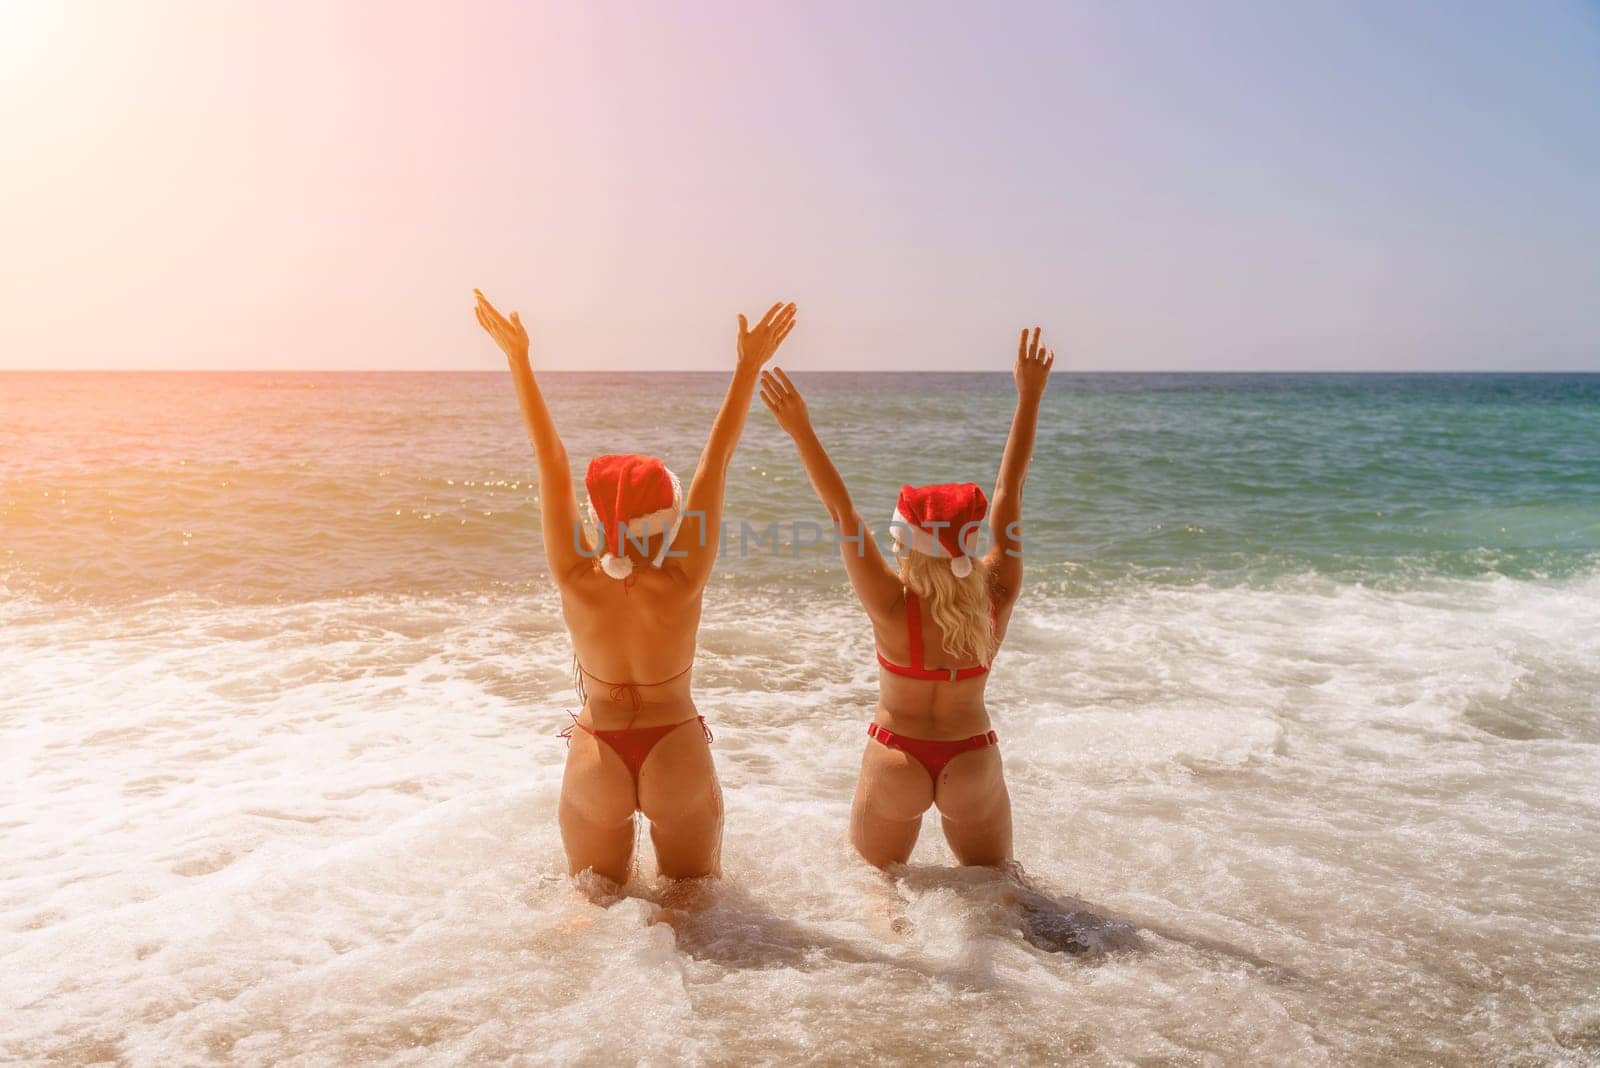 Women Santa hats ocean play. Seaside, beach daytime, enjoying beach fun. Two women in red swimsuits and Santa hats are enjoying themselves in the ocean, kneeling in the waves and raising their hands up